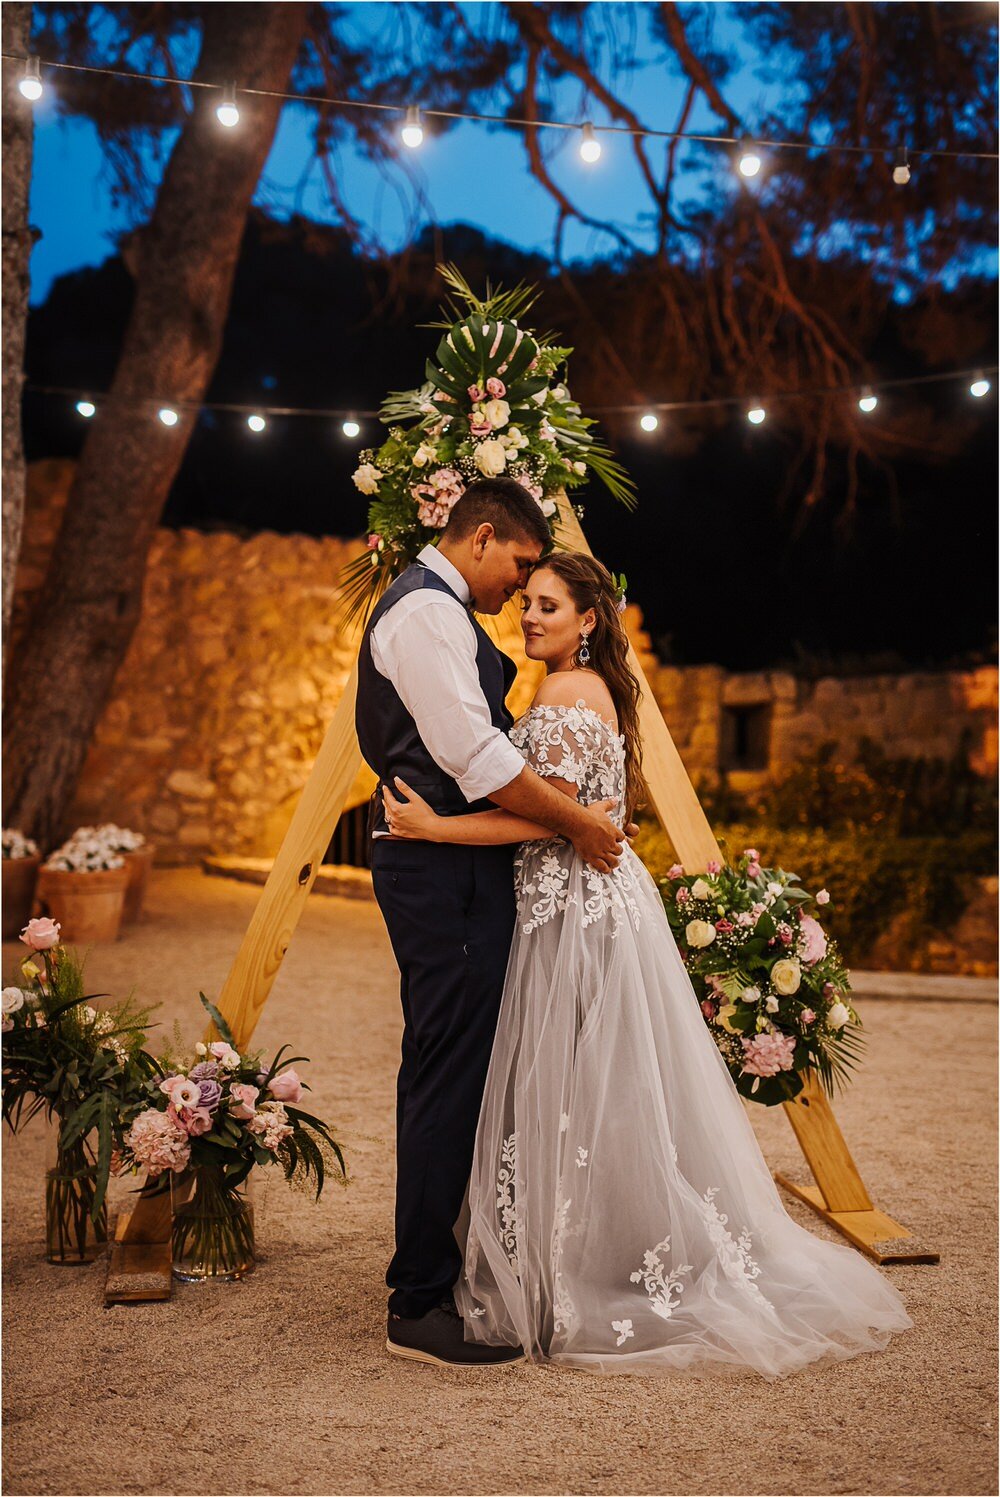 best of wedding photography 2019 photographer italy ireland tuscany santorini greece spain barcelona lake como chateux scotland destination wedding 0170.jpg